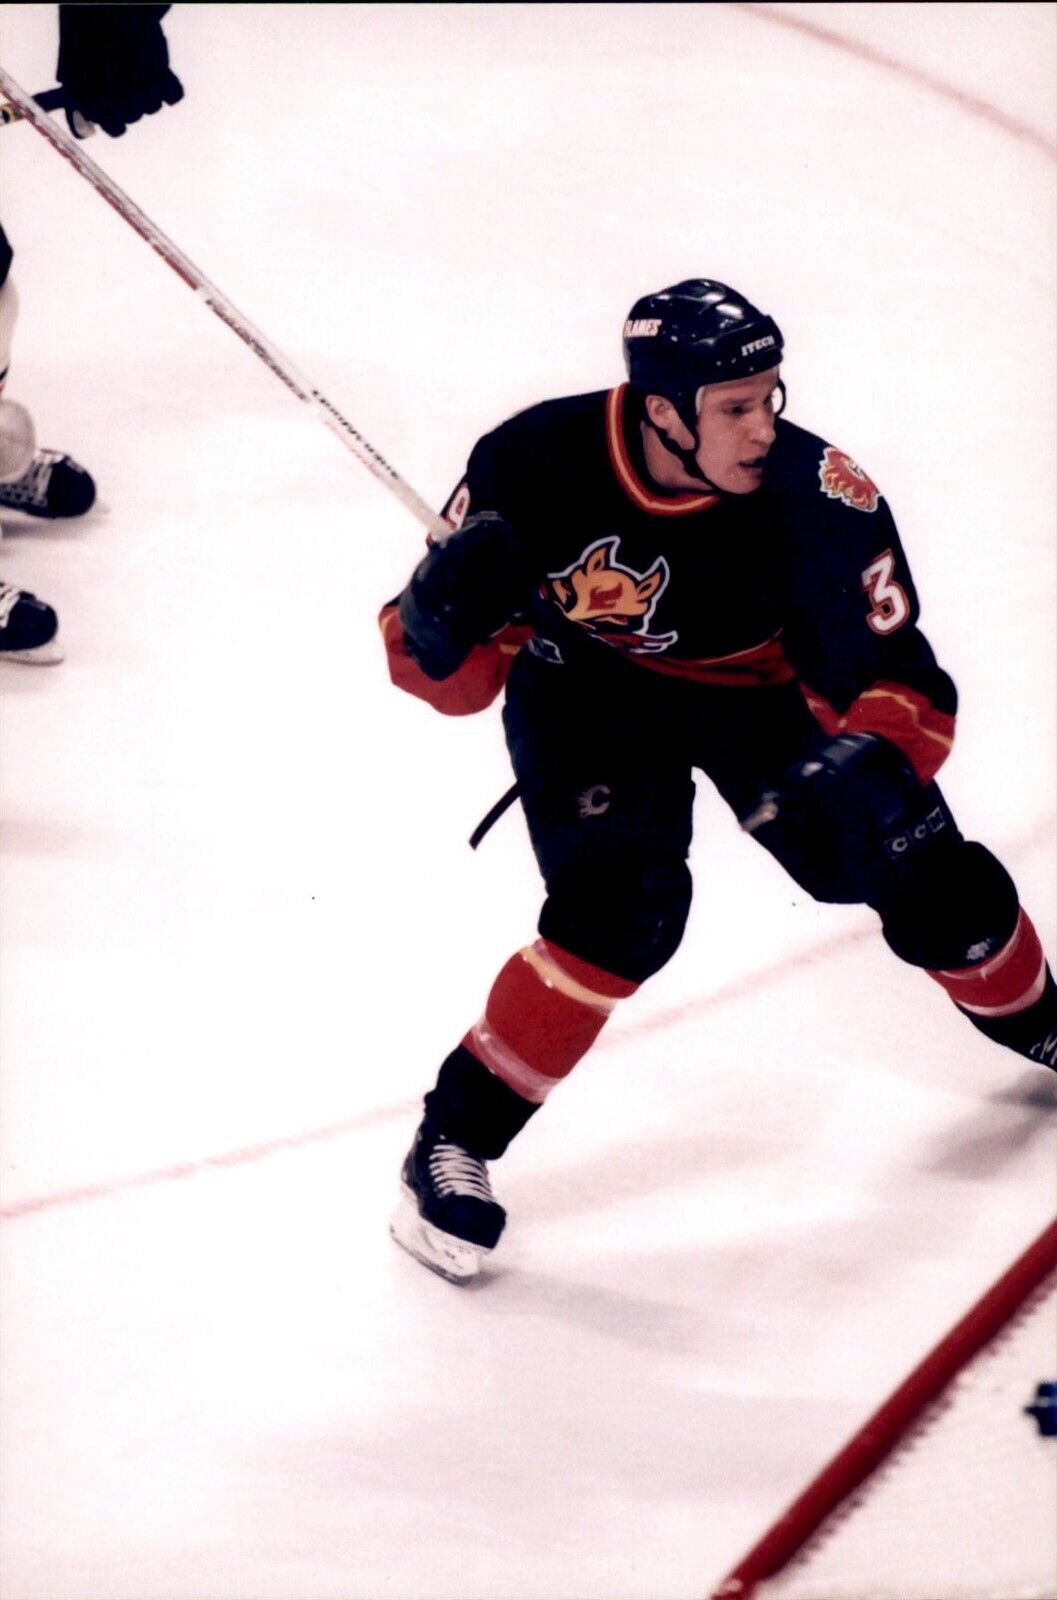 PF29 2000 Original Photo BENOIT GRATTON CALGARY FLAMES LEFT WING NHL ICE HOCKEY